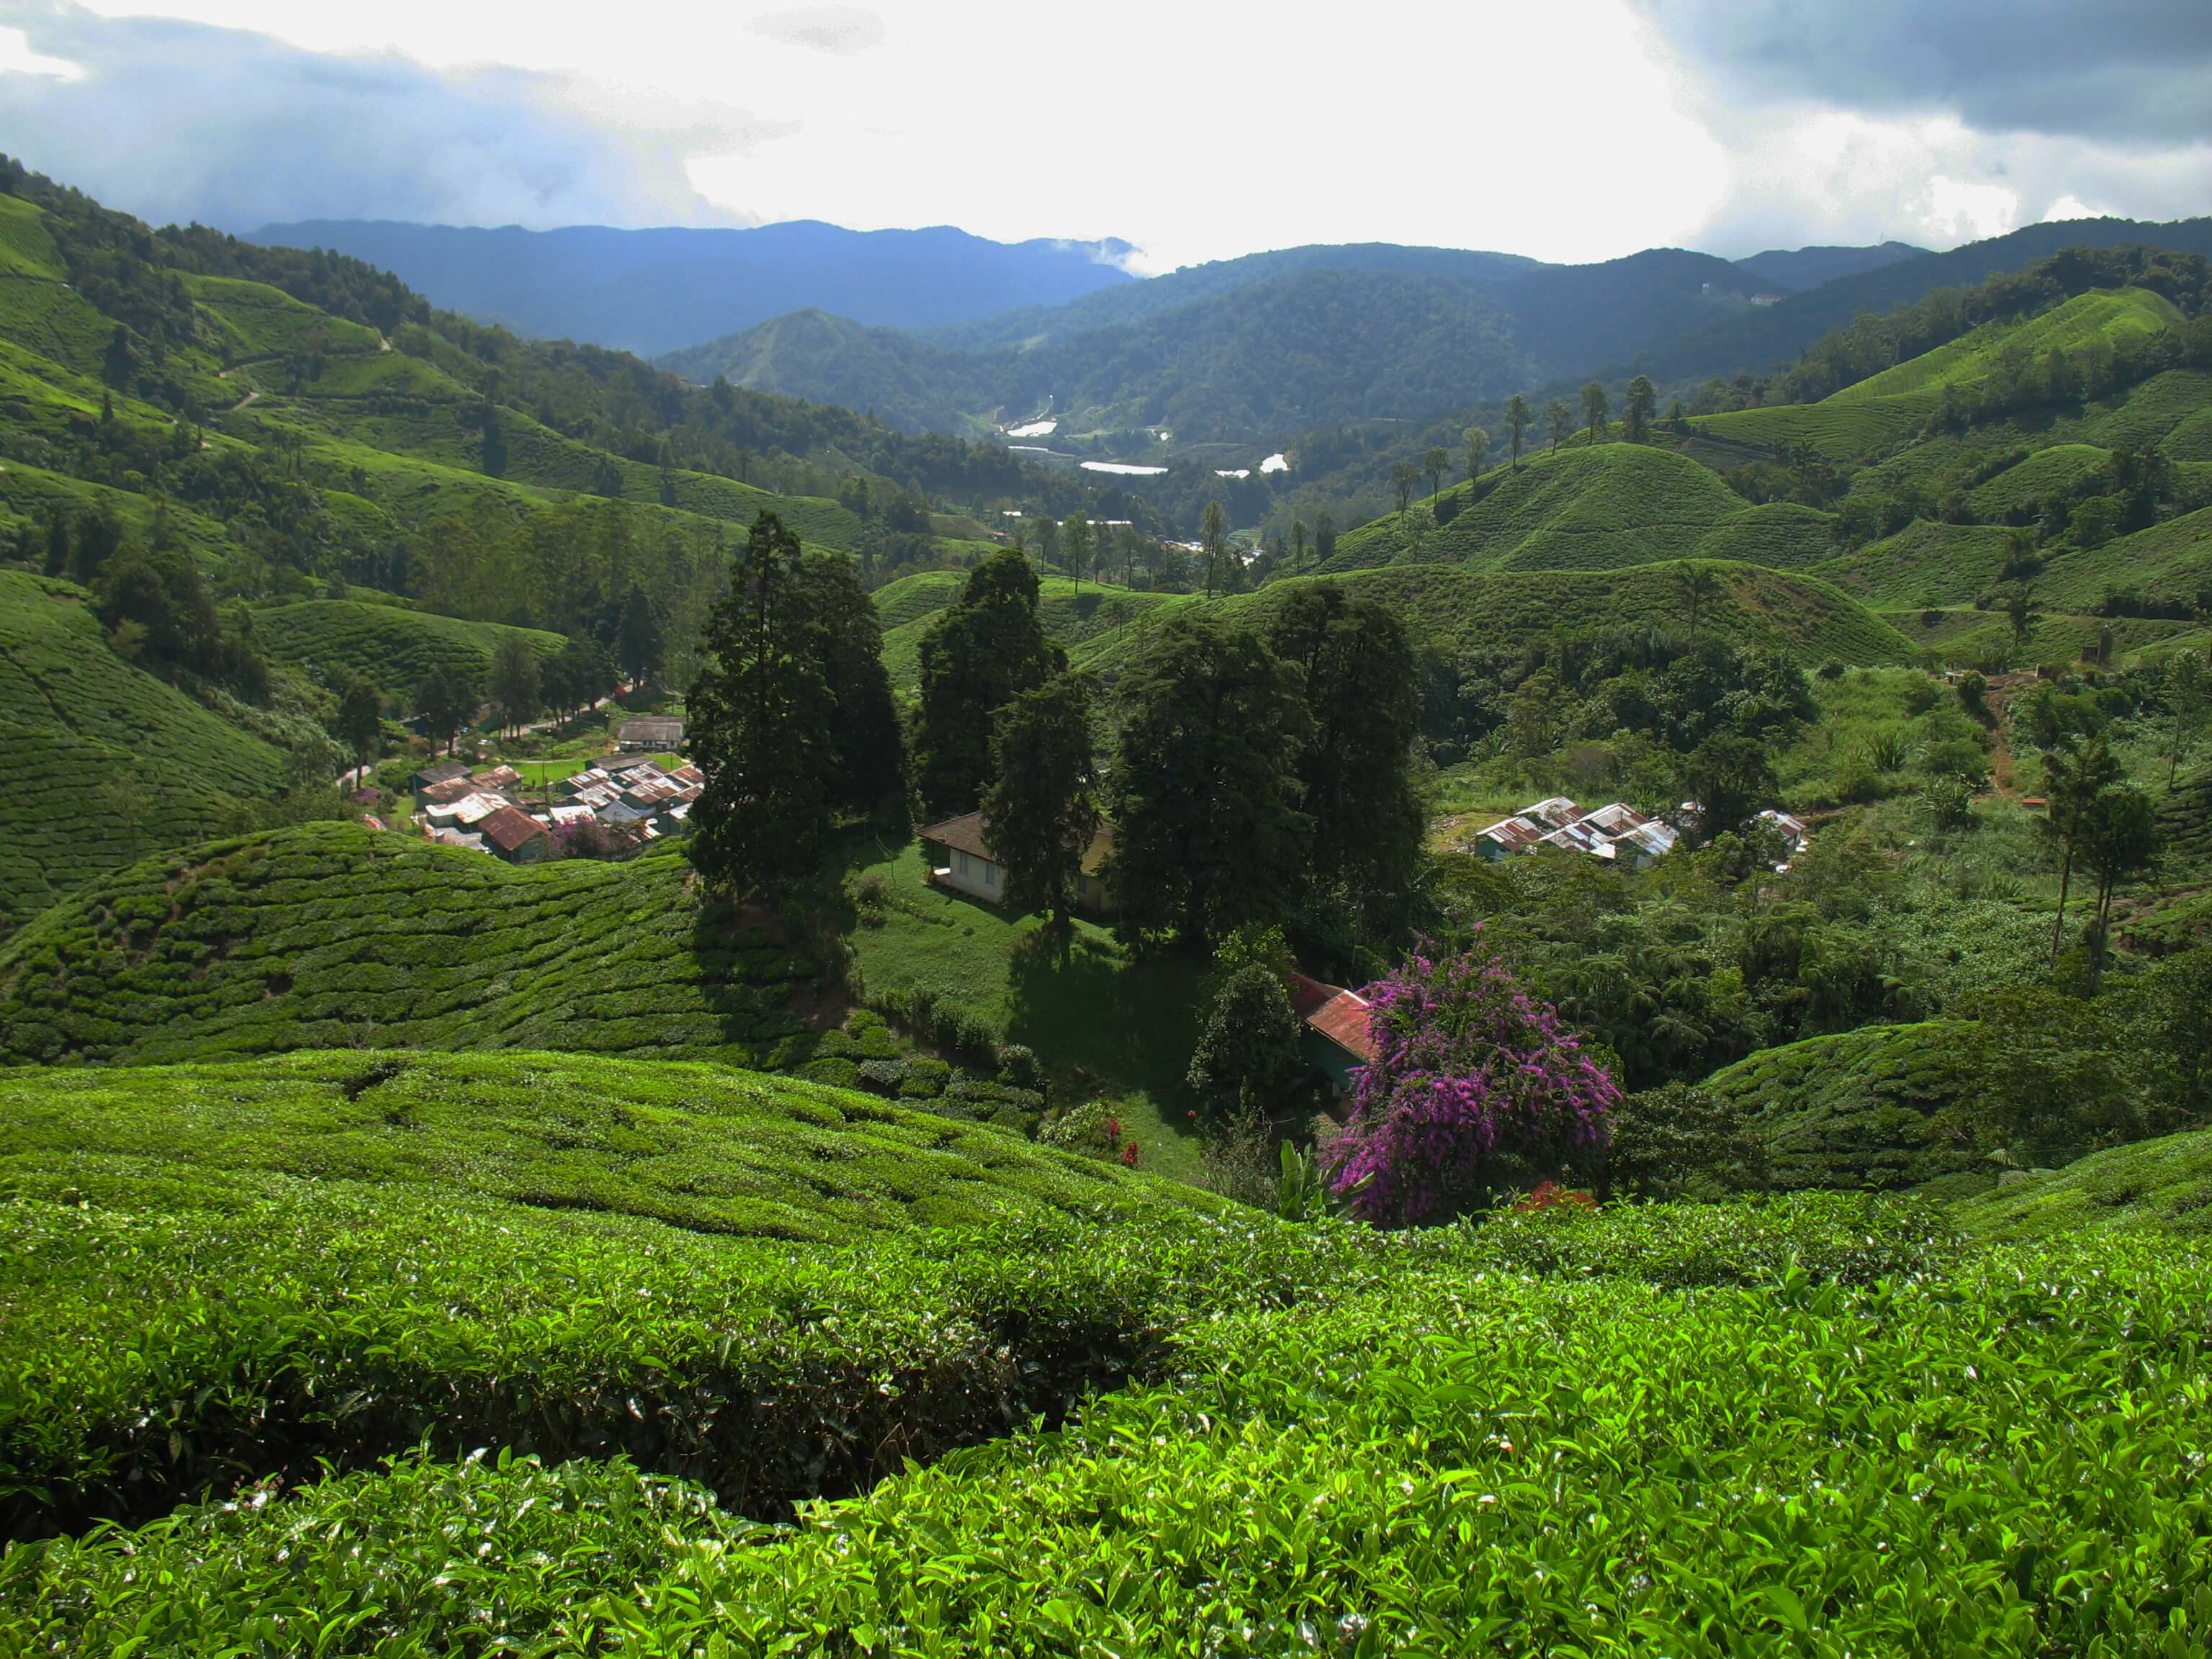 Most Popular Tea Gardens in Malaysia